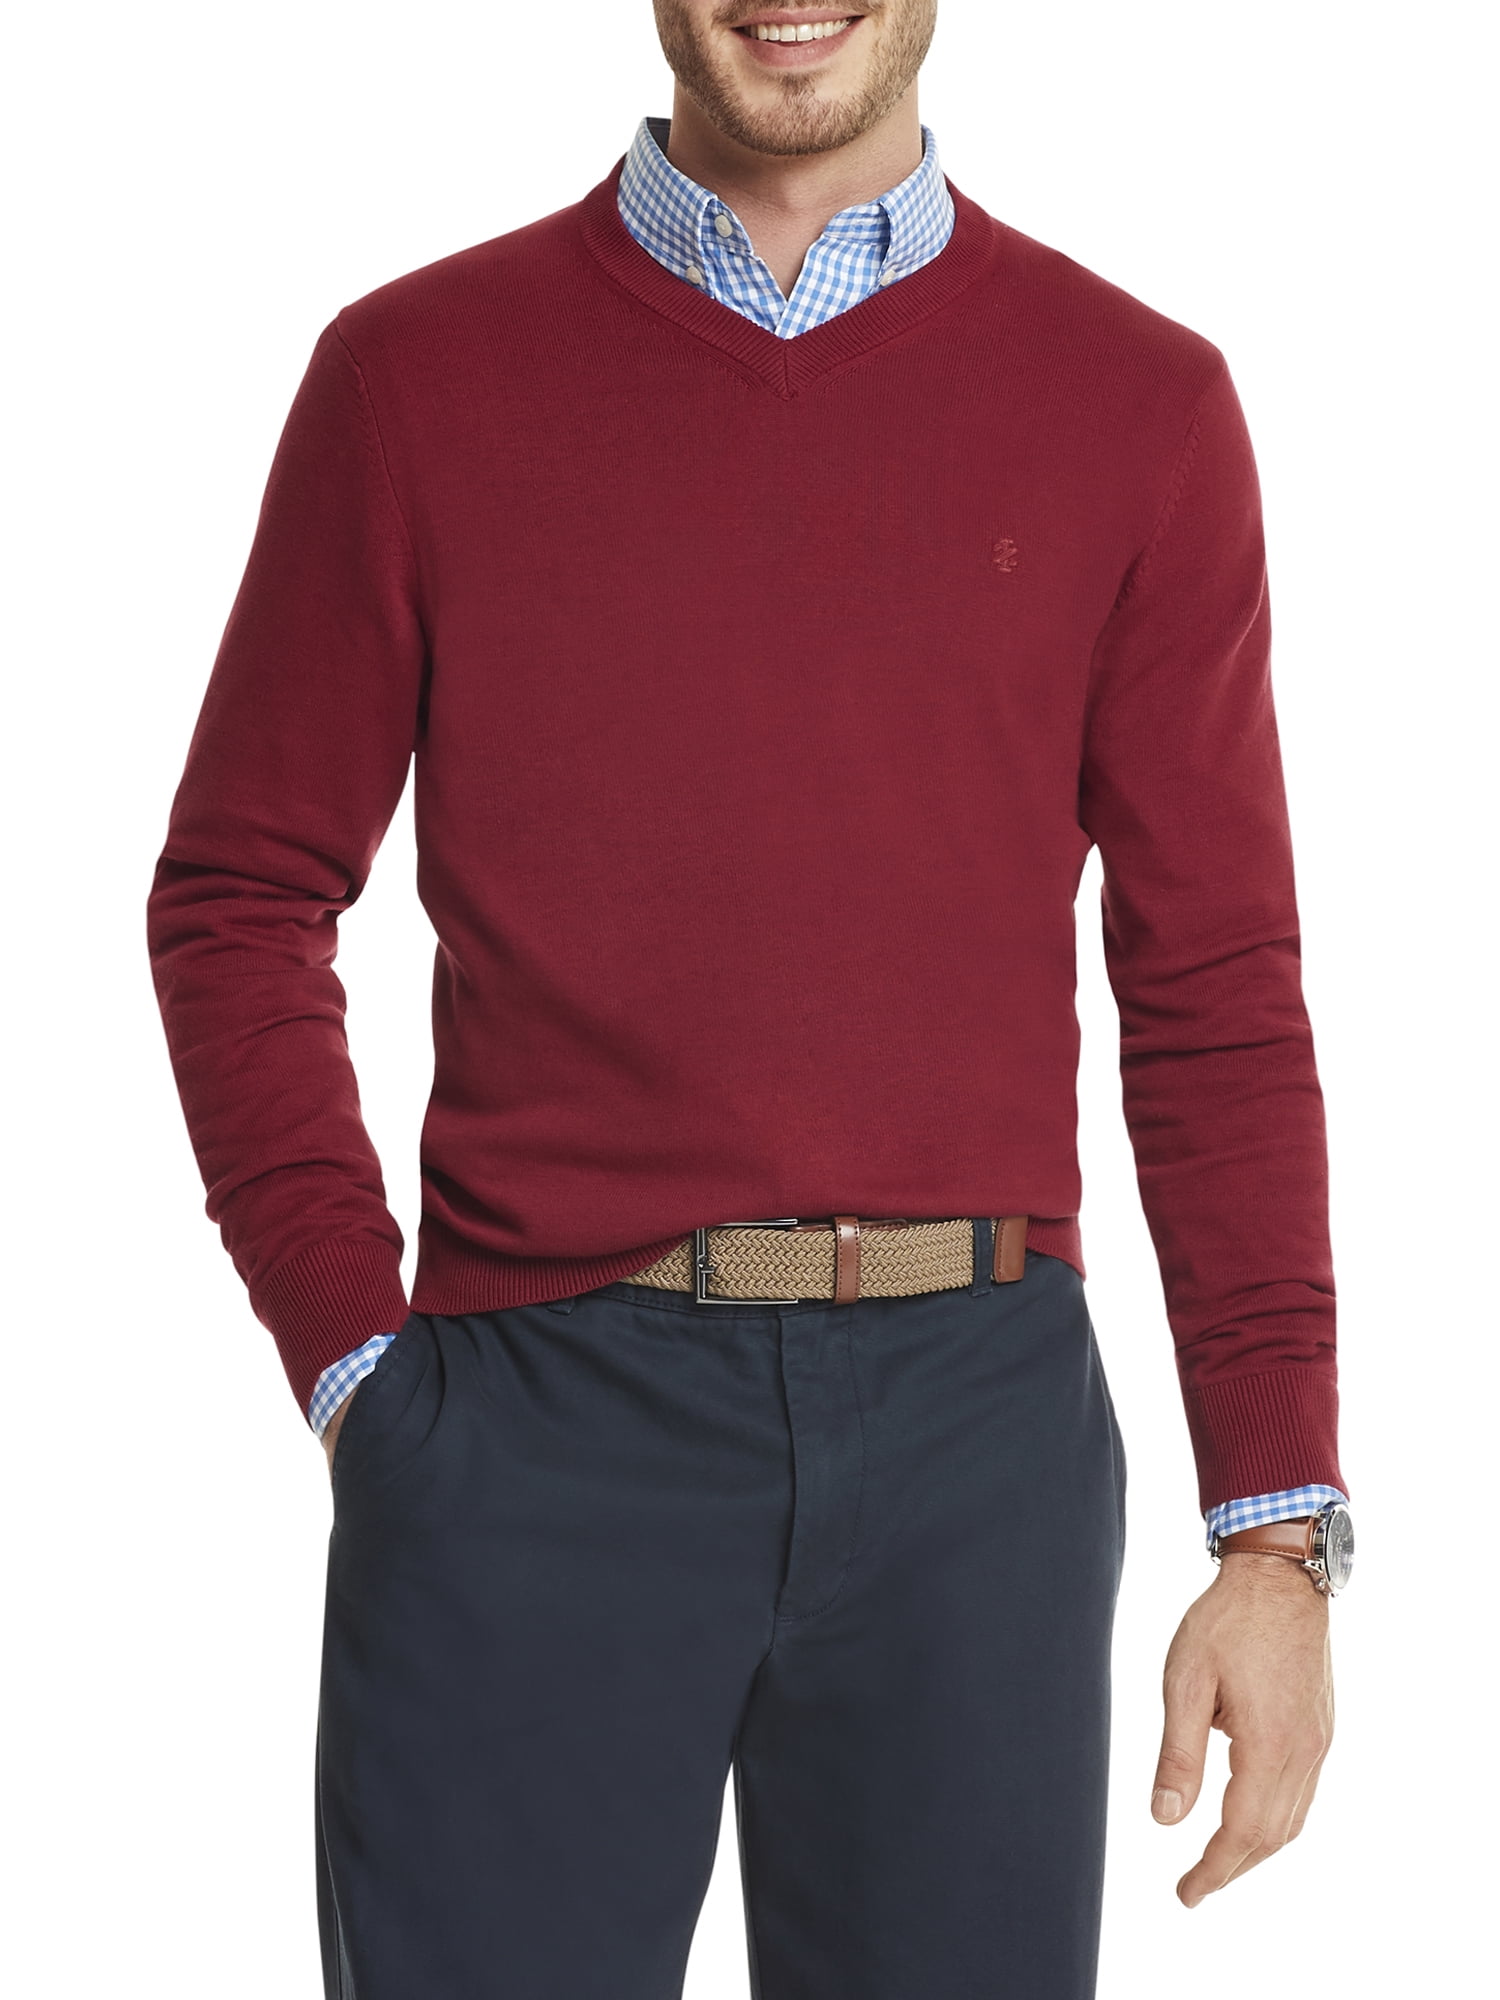 IZOD Men's 12 GG V-Neck Sweater - Walmart.com